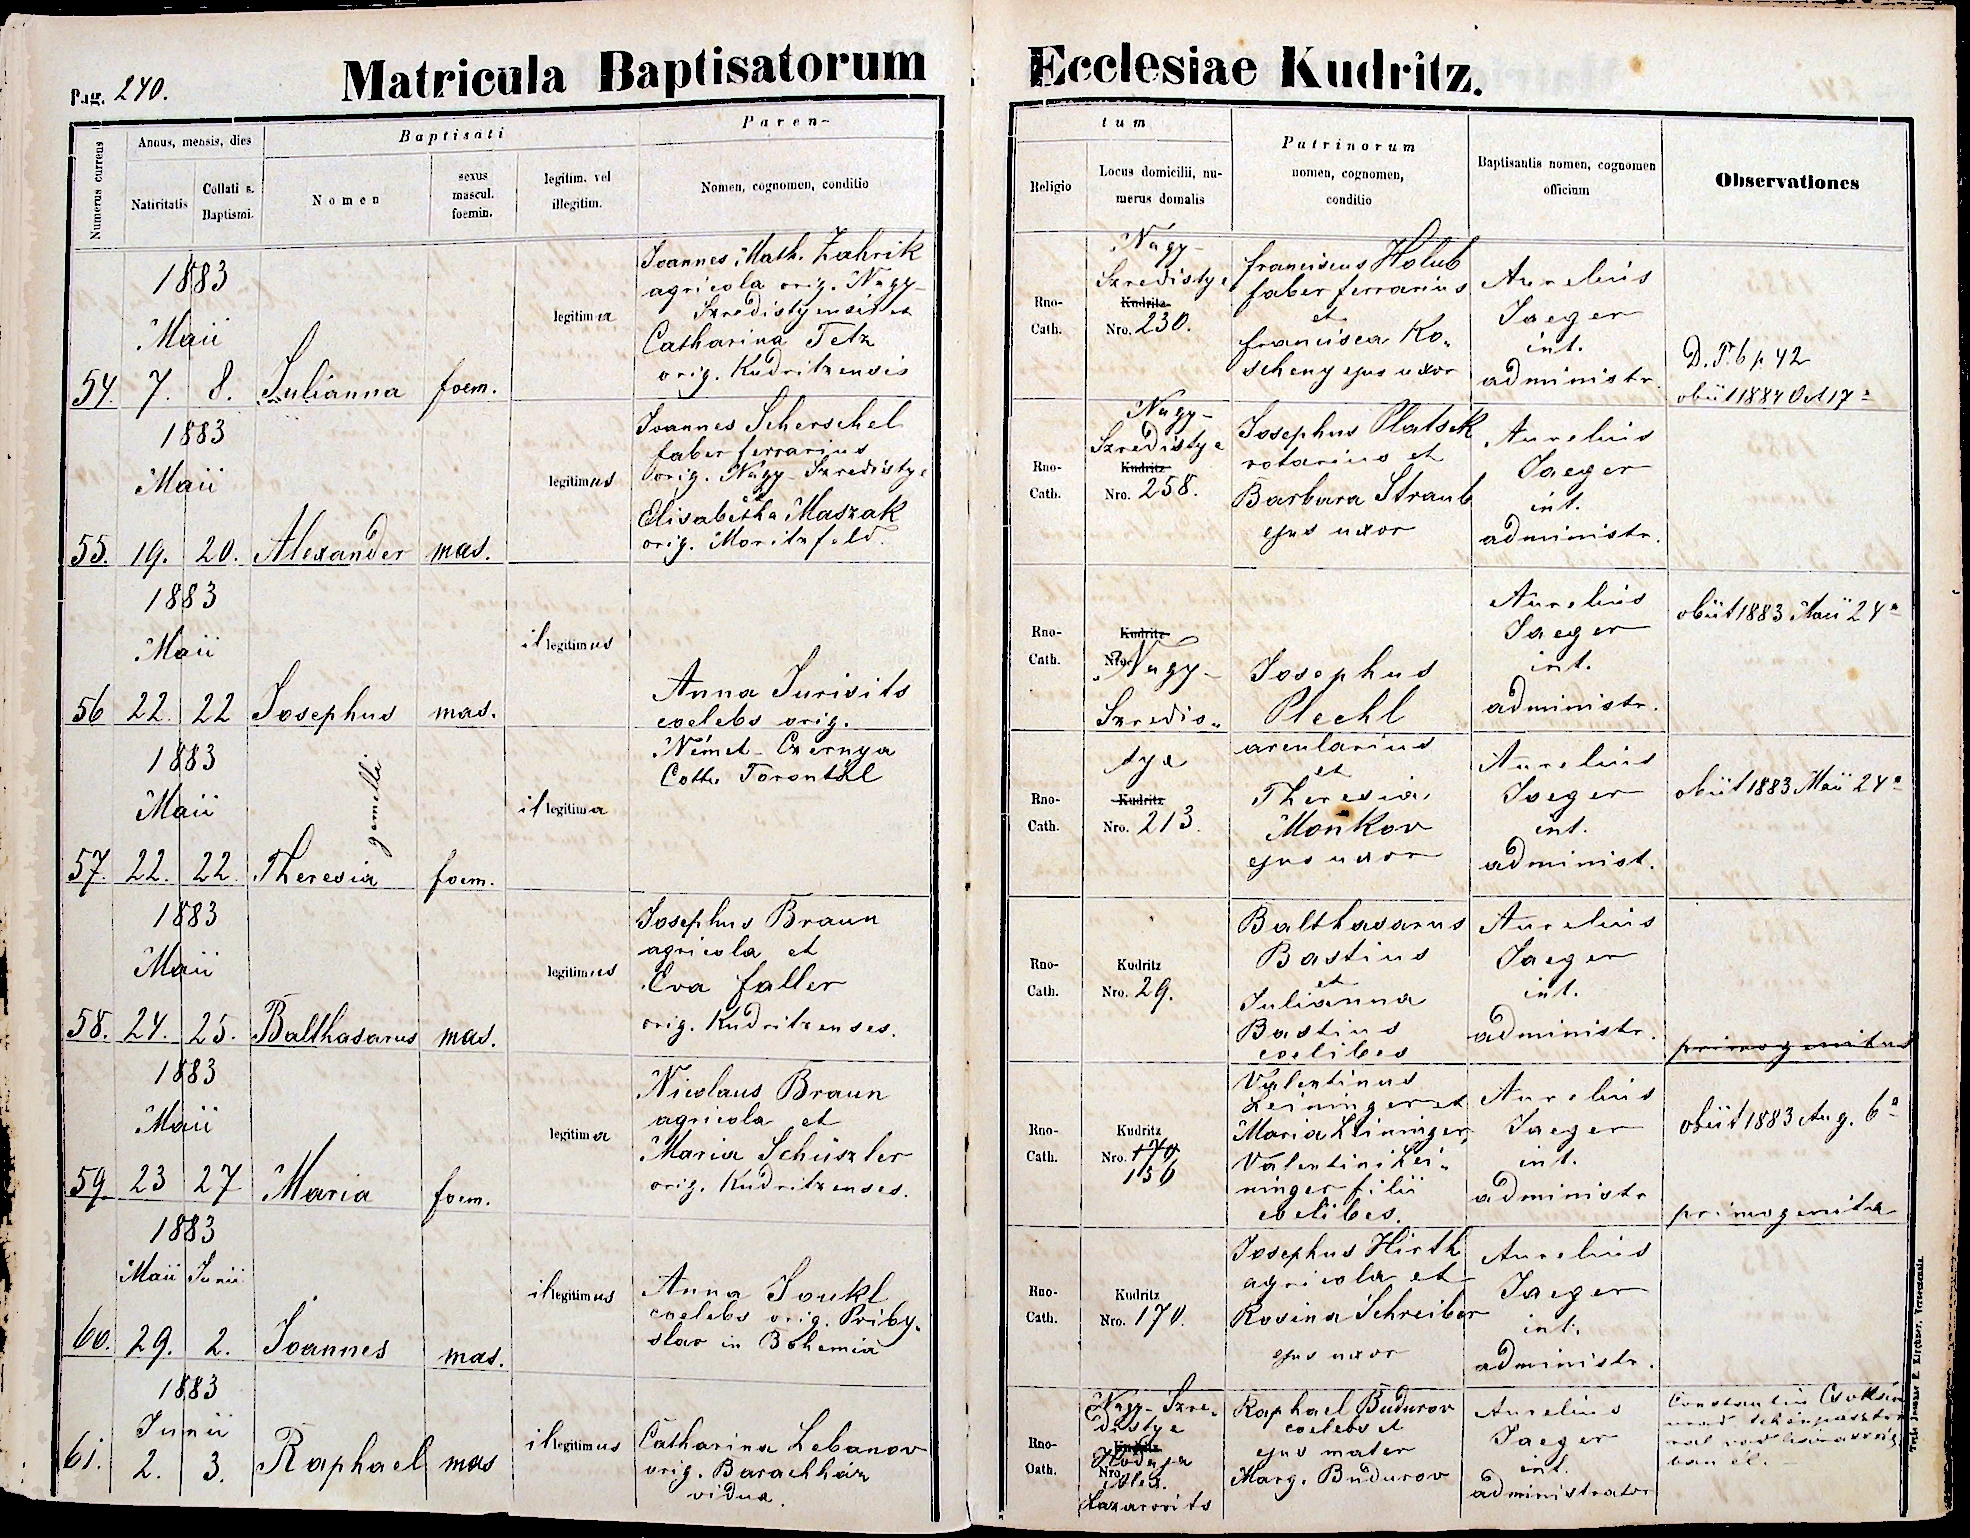 images/church_records/BIRTHS/1880-1883B/1883/240